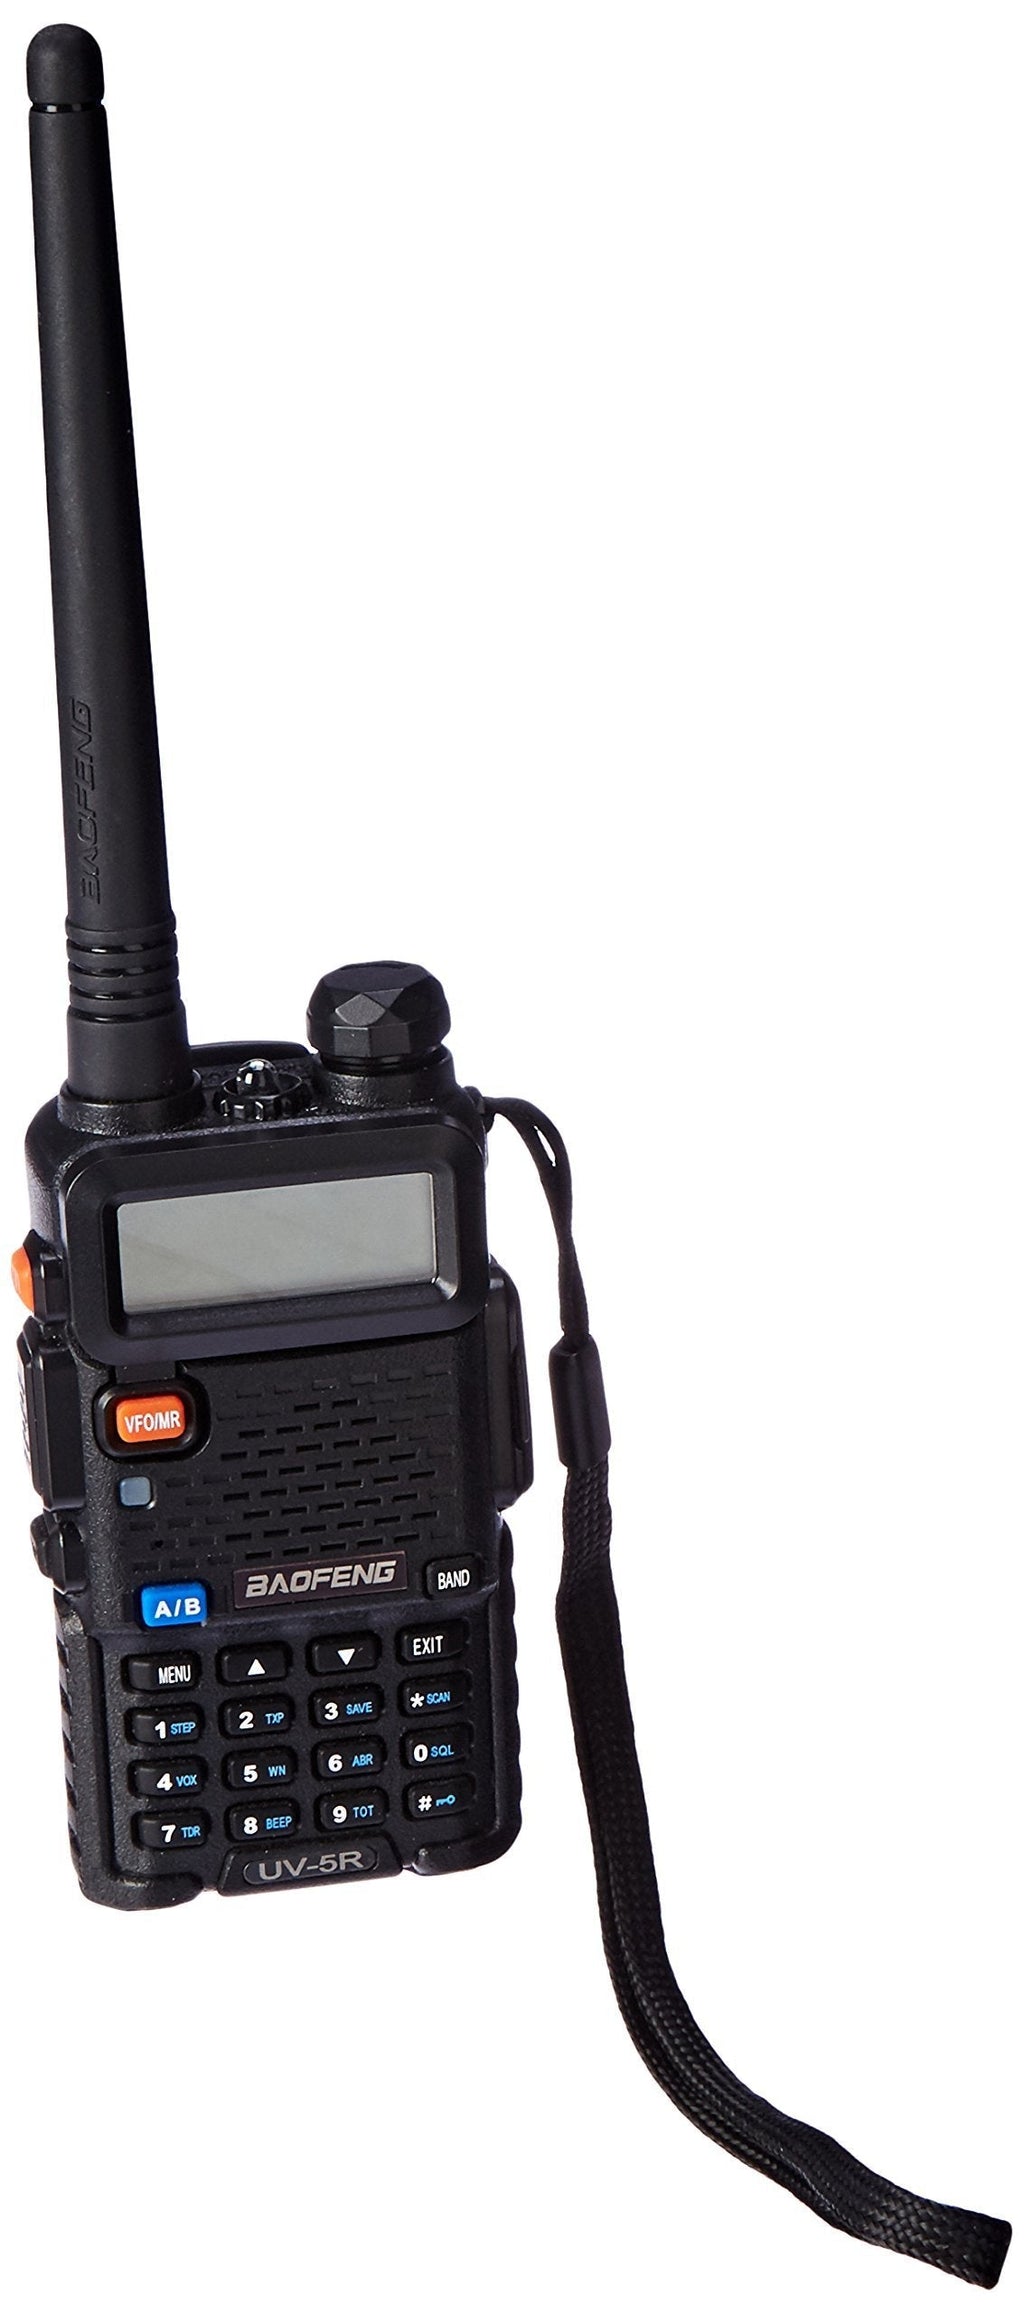  [AUSTRALIA] - BAOFENG UV-5R VHF/UHF Dual Band Radio 144-148MHz 420-450MHz Transceiver